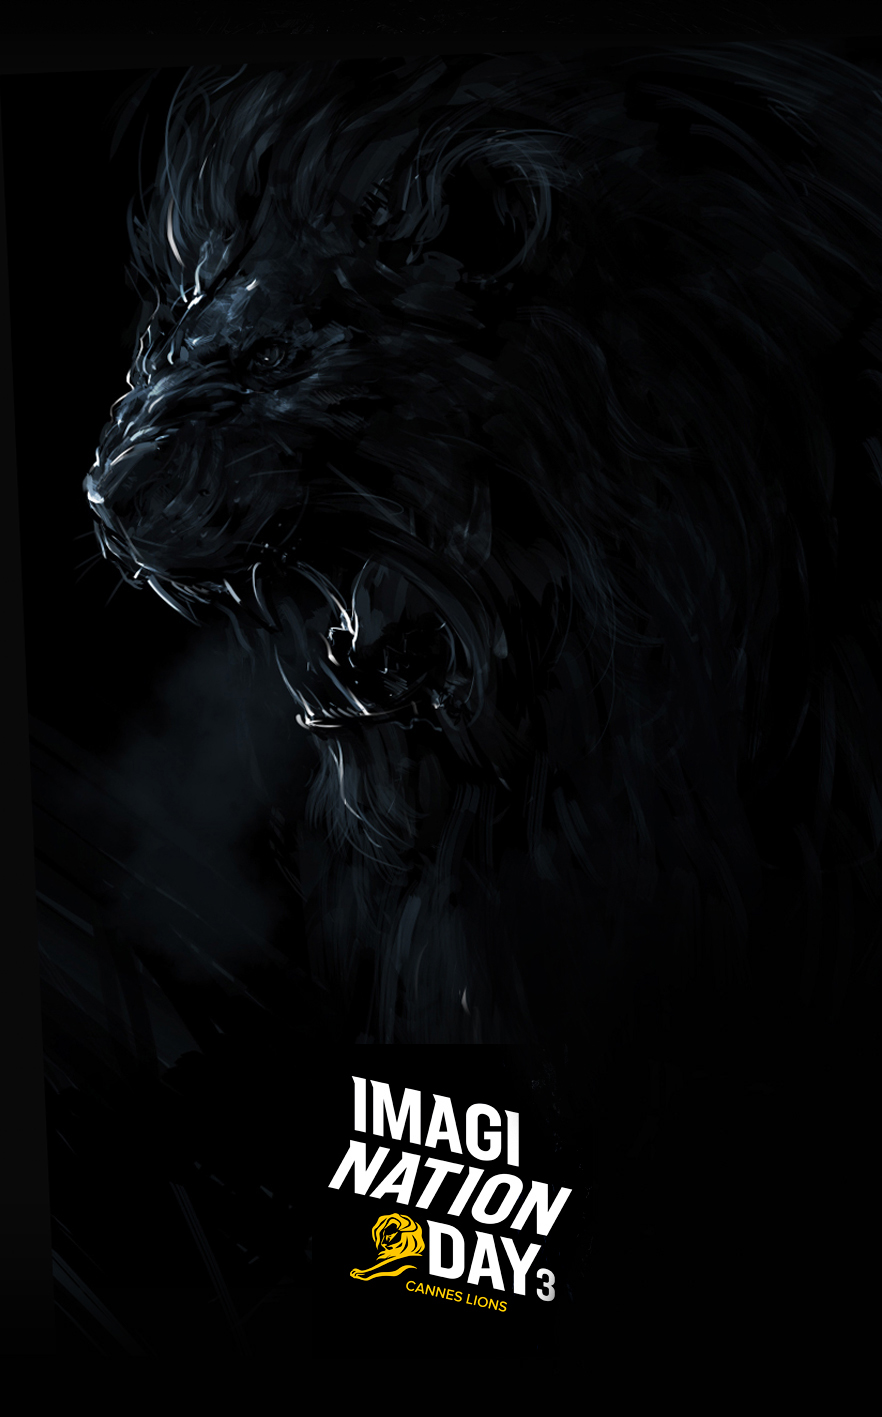 Cannes Lions Cannes lions imagination imaginaiton day ars thanea ars warsaw conference lion black on black black sculpture